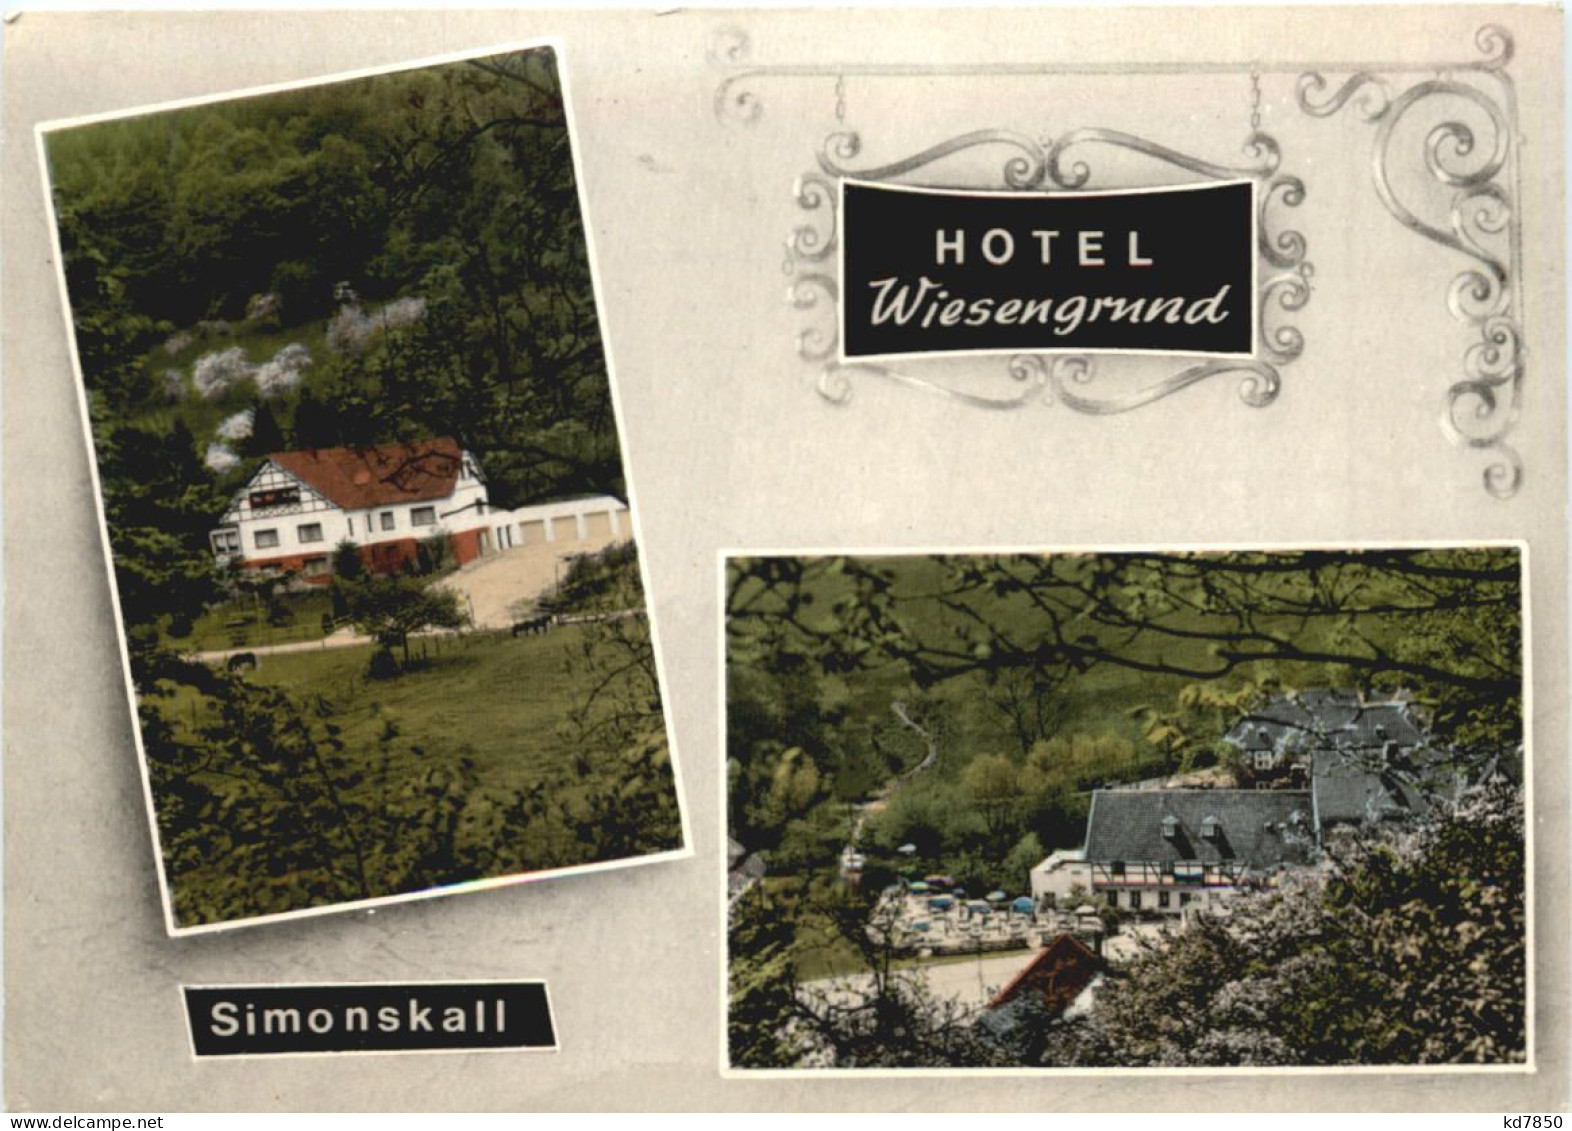 Simonskall - Hotel Wiesengrund - Dueren